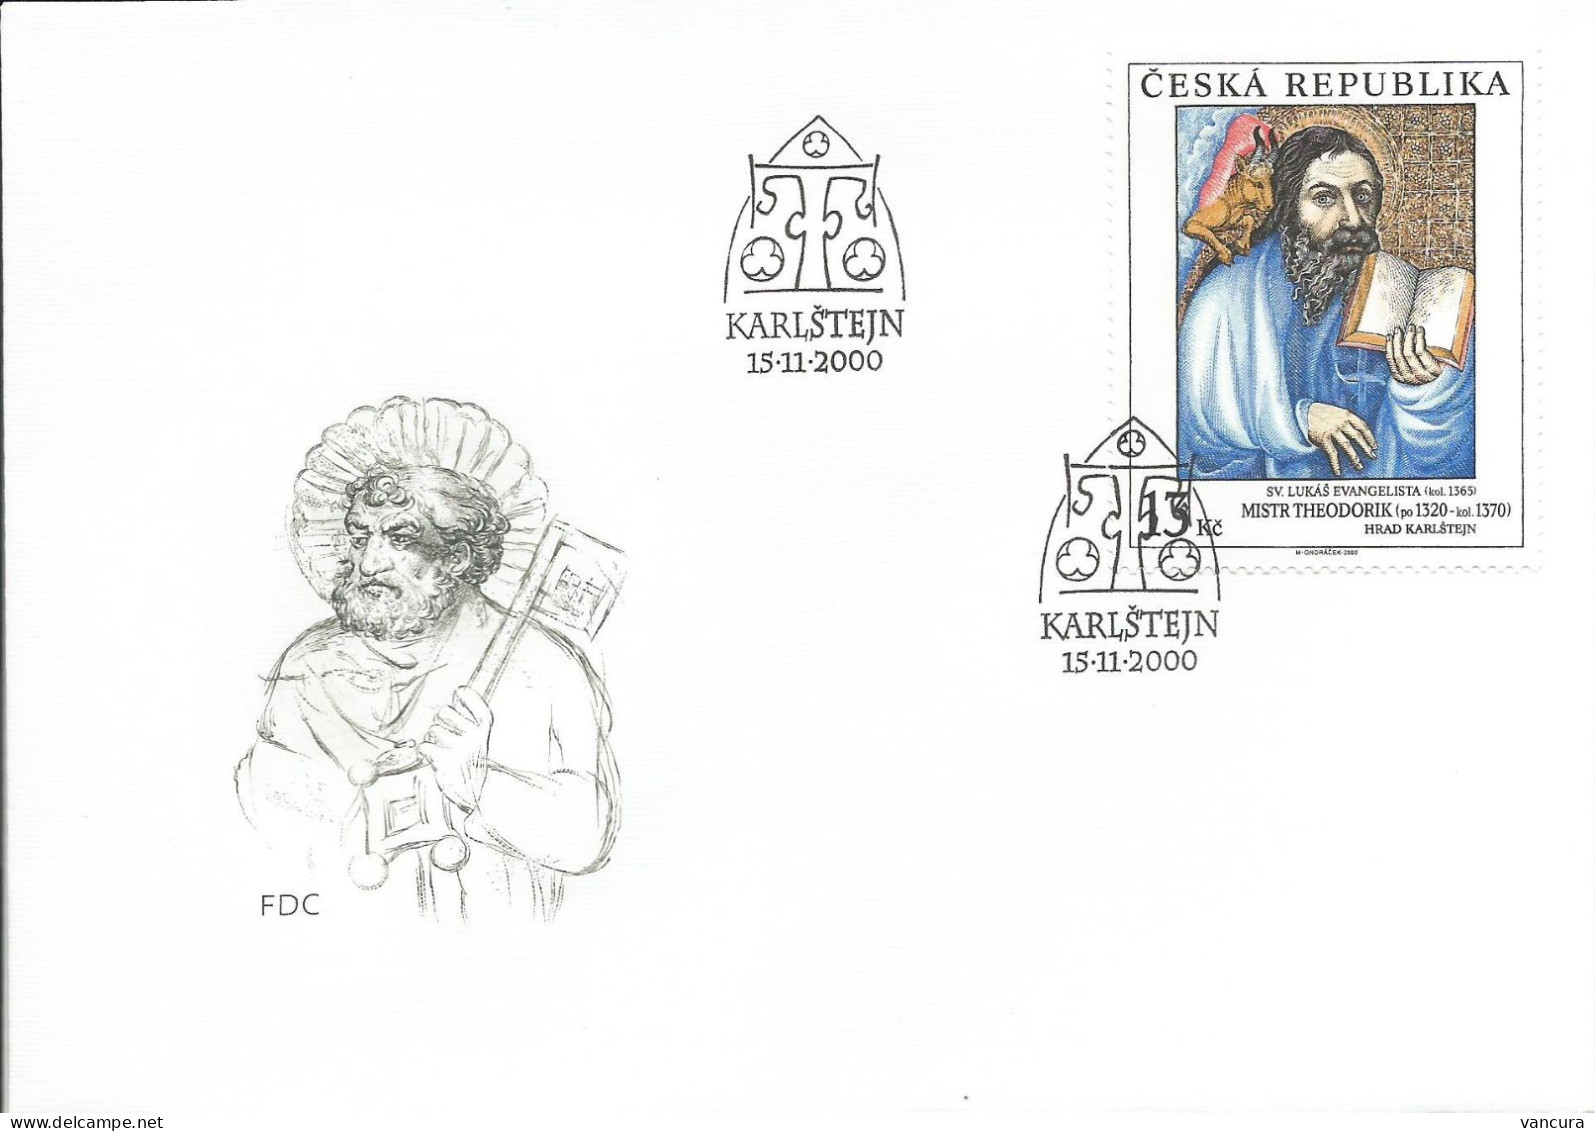 FDC 275 Czech Republic Master Theodorik, St Lucas, The Evangelist 2000 - Religion